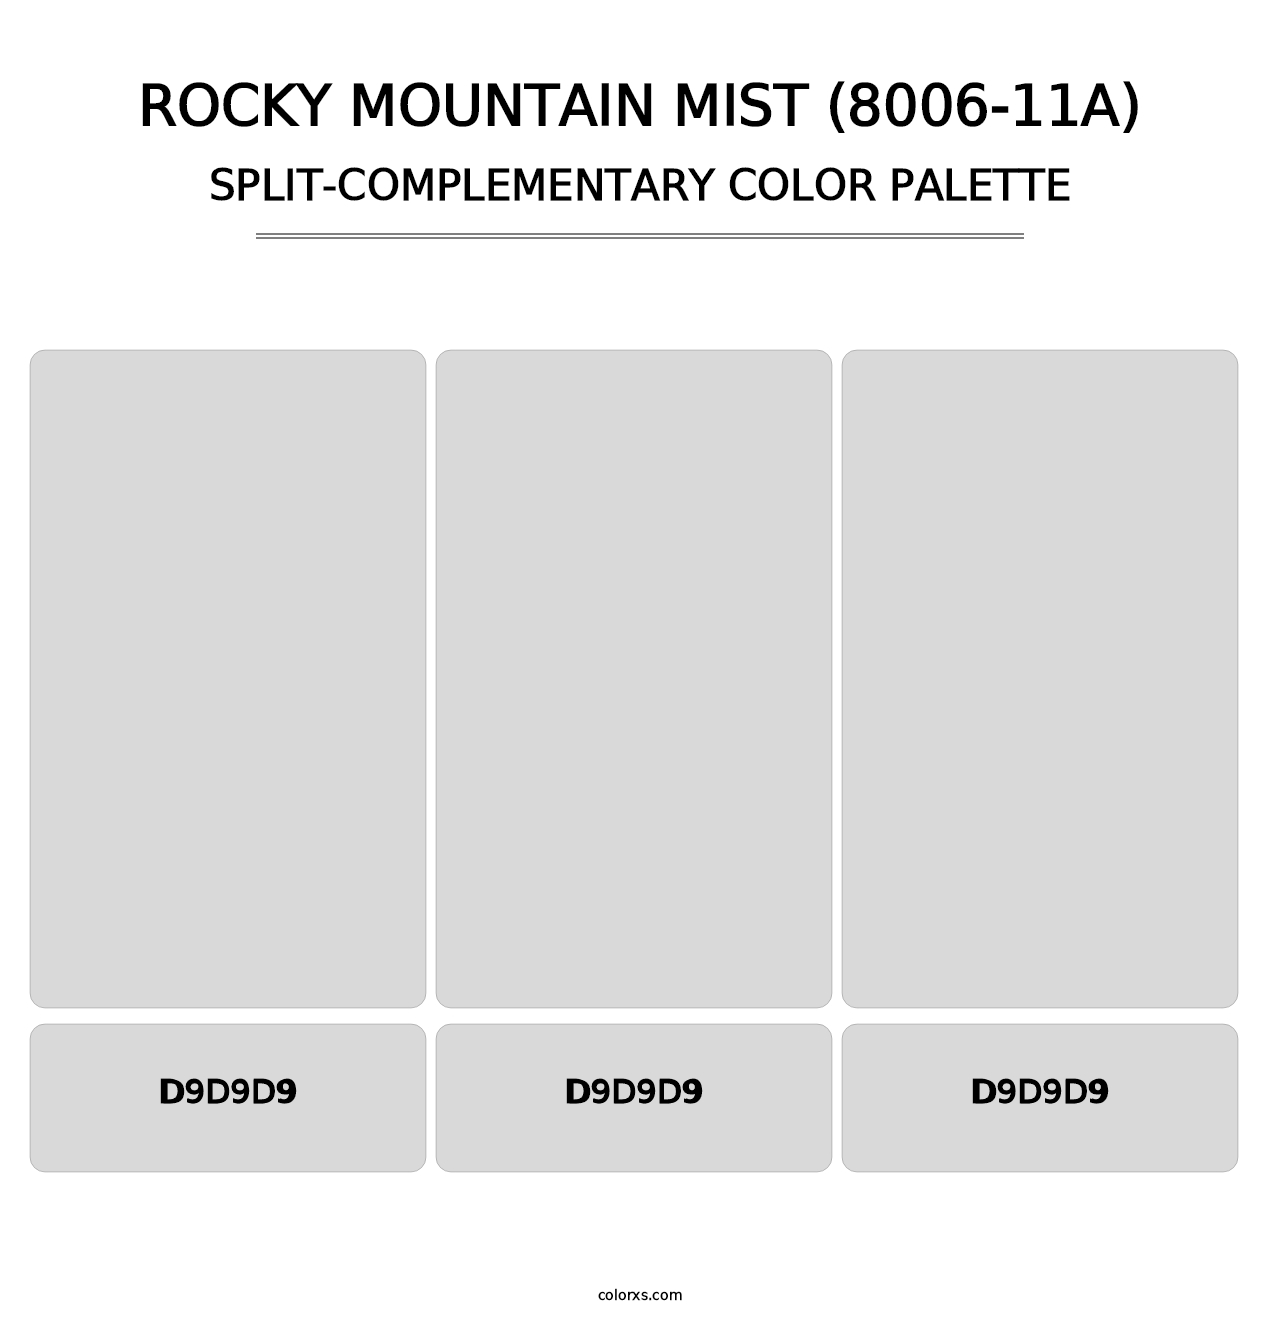 Rocky Mountain Mist (8006-11A) - Split-Complementary Color Palette